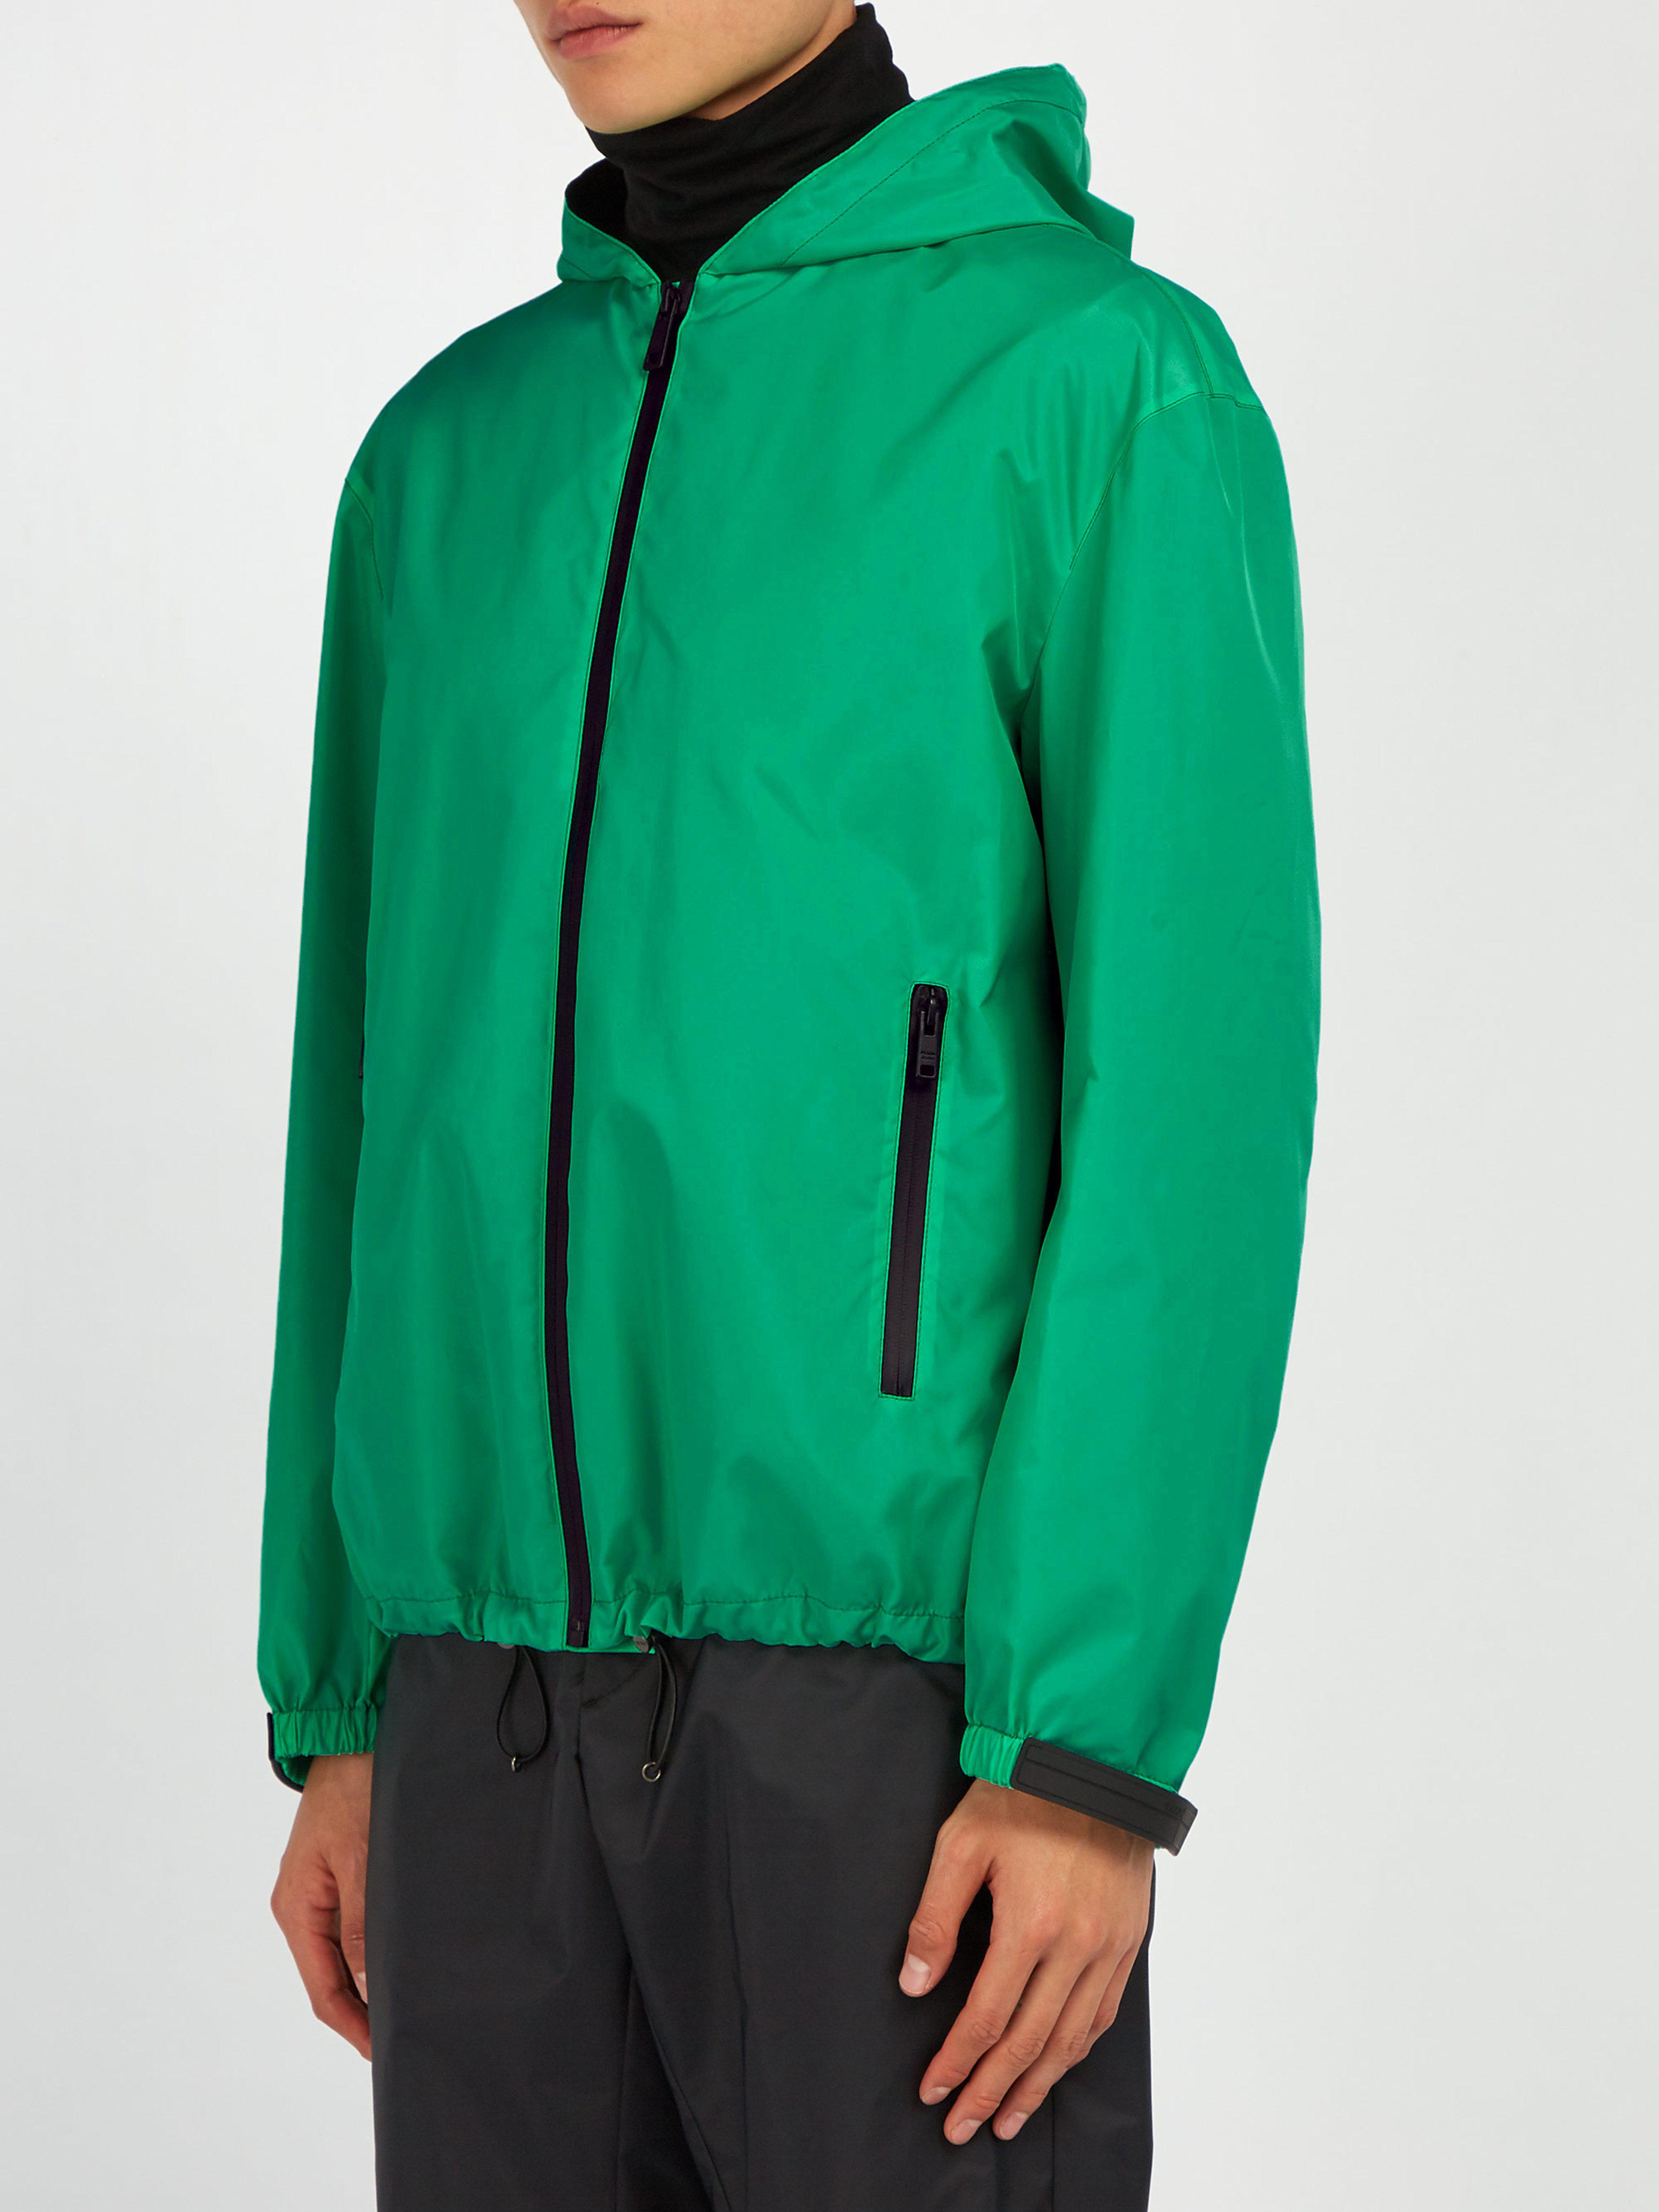 Prada Lightweight Technical Jacket in Green for Men | Lyst UK